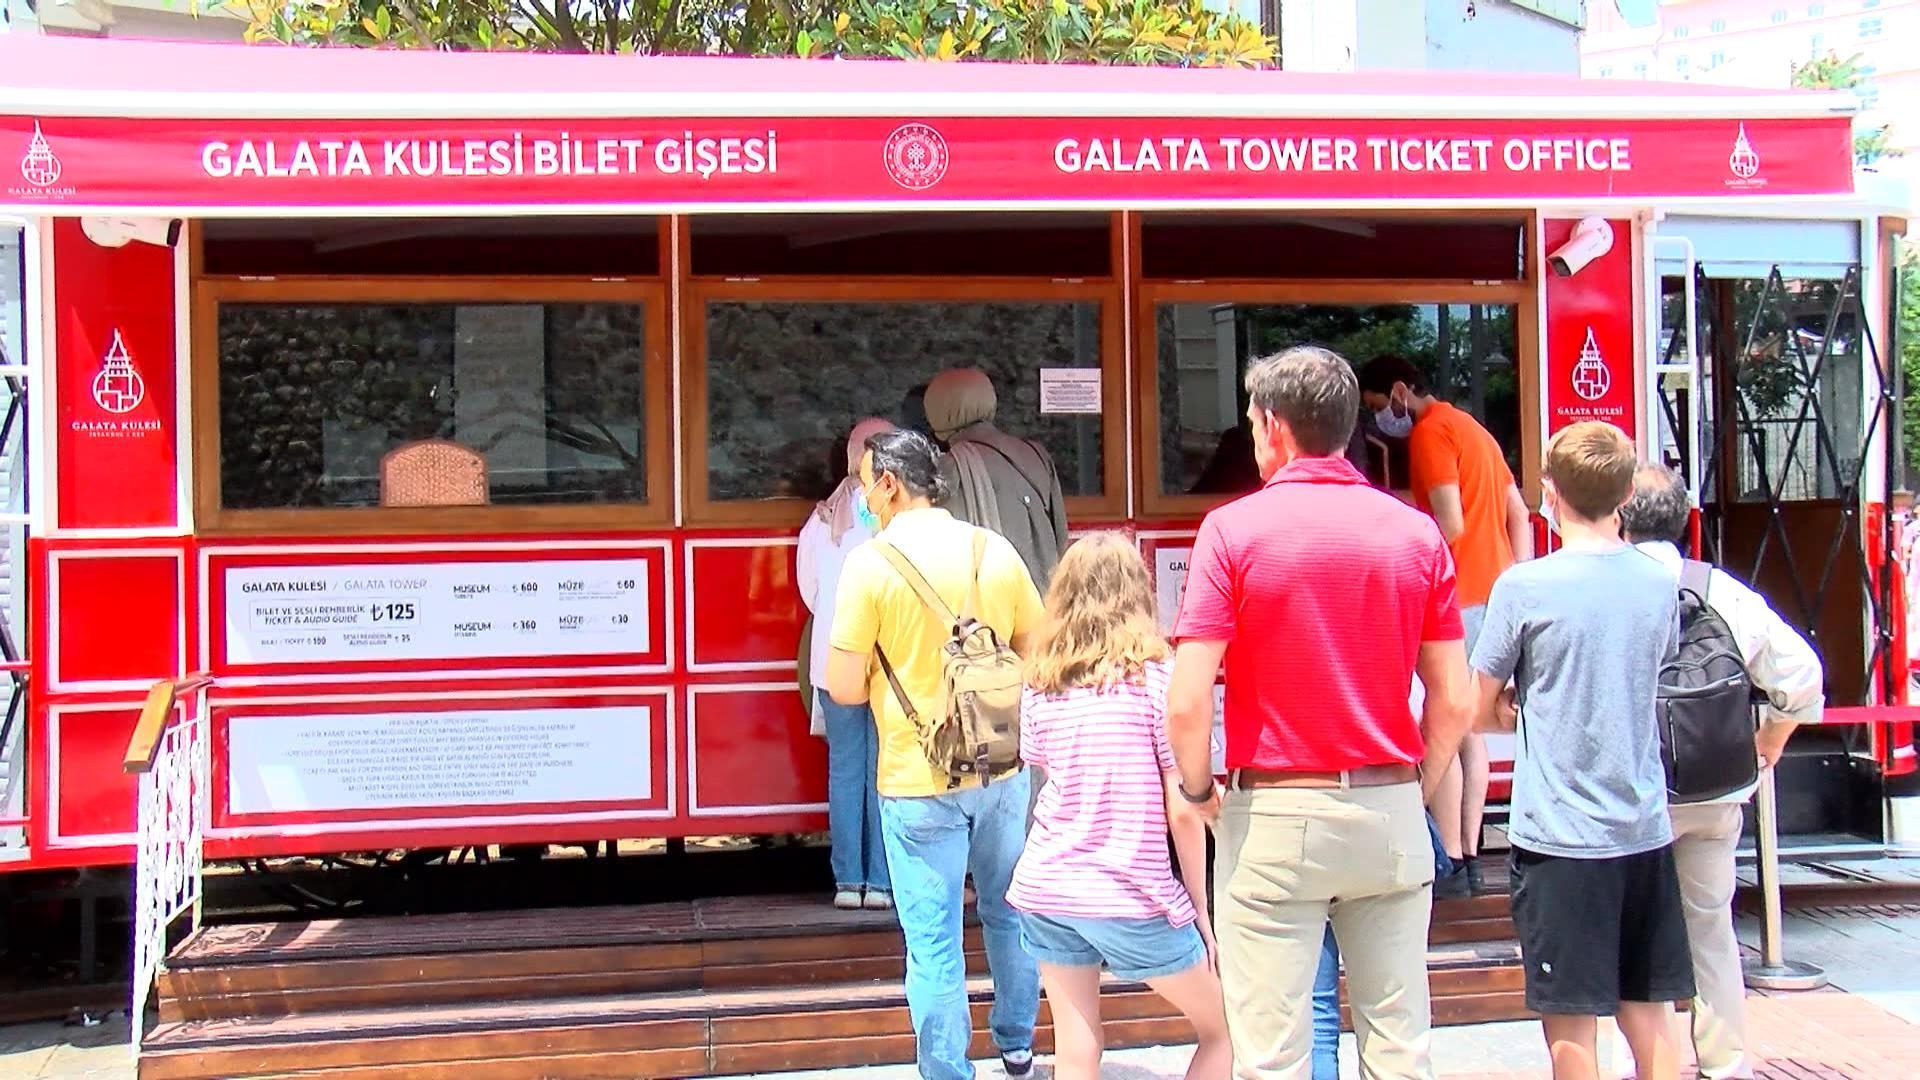 Galata Kulesini ziyaret yabancılara 100 lira, yerli turiste müze kart ile 60 lira